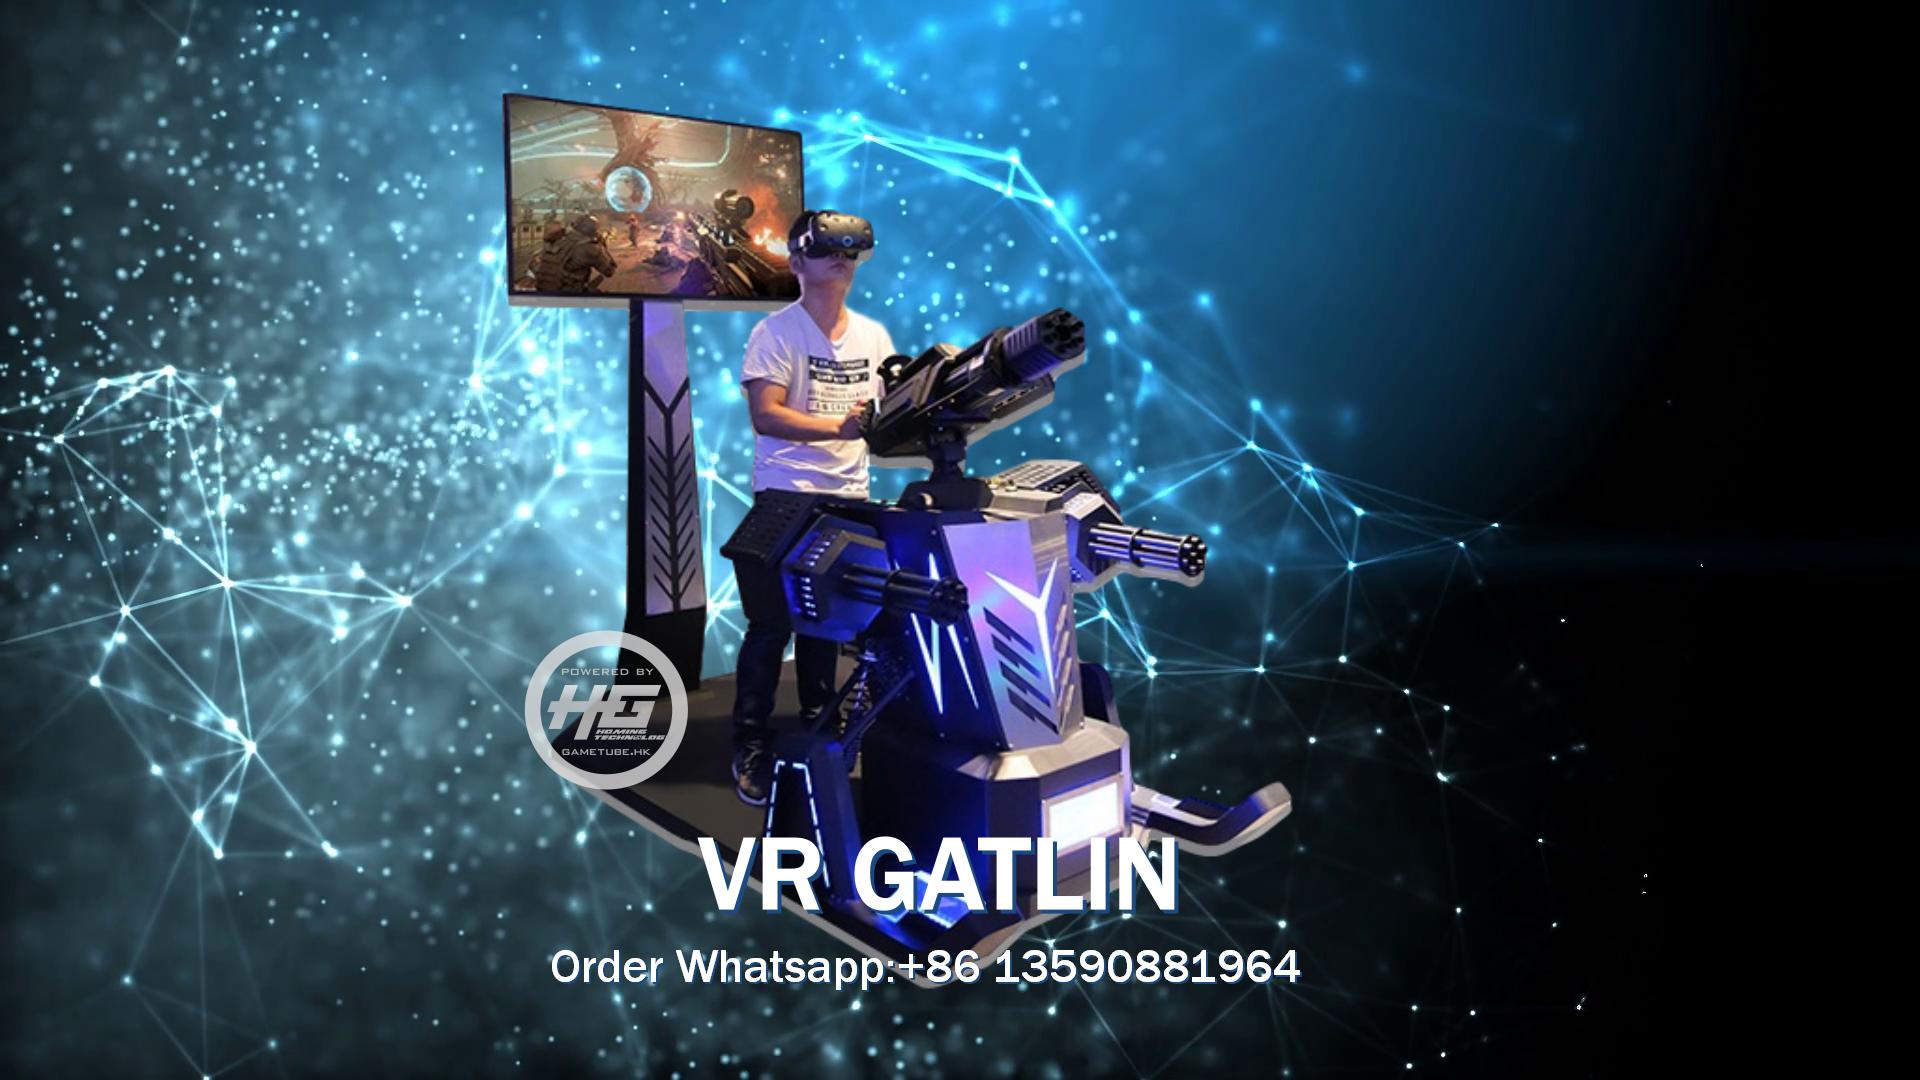 Newest 9D VR Simulator Games - 9D VR Gatlin Arcade Game